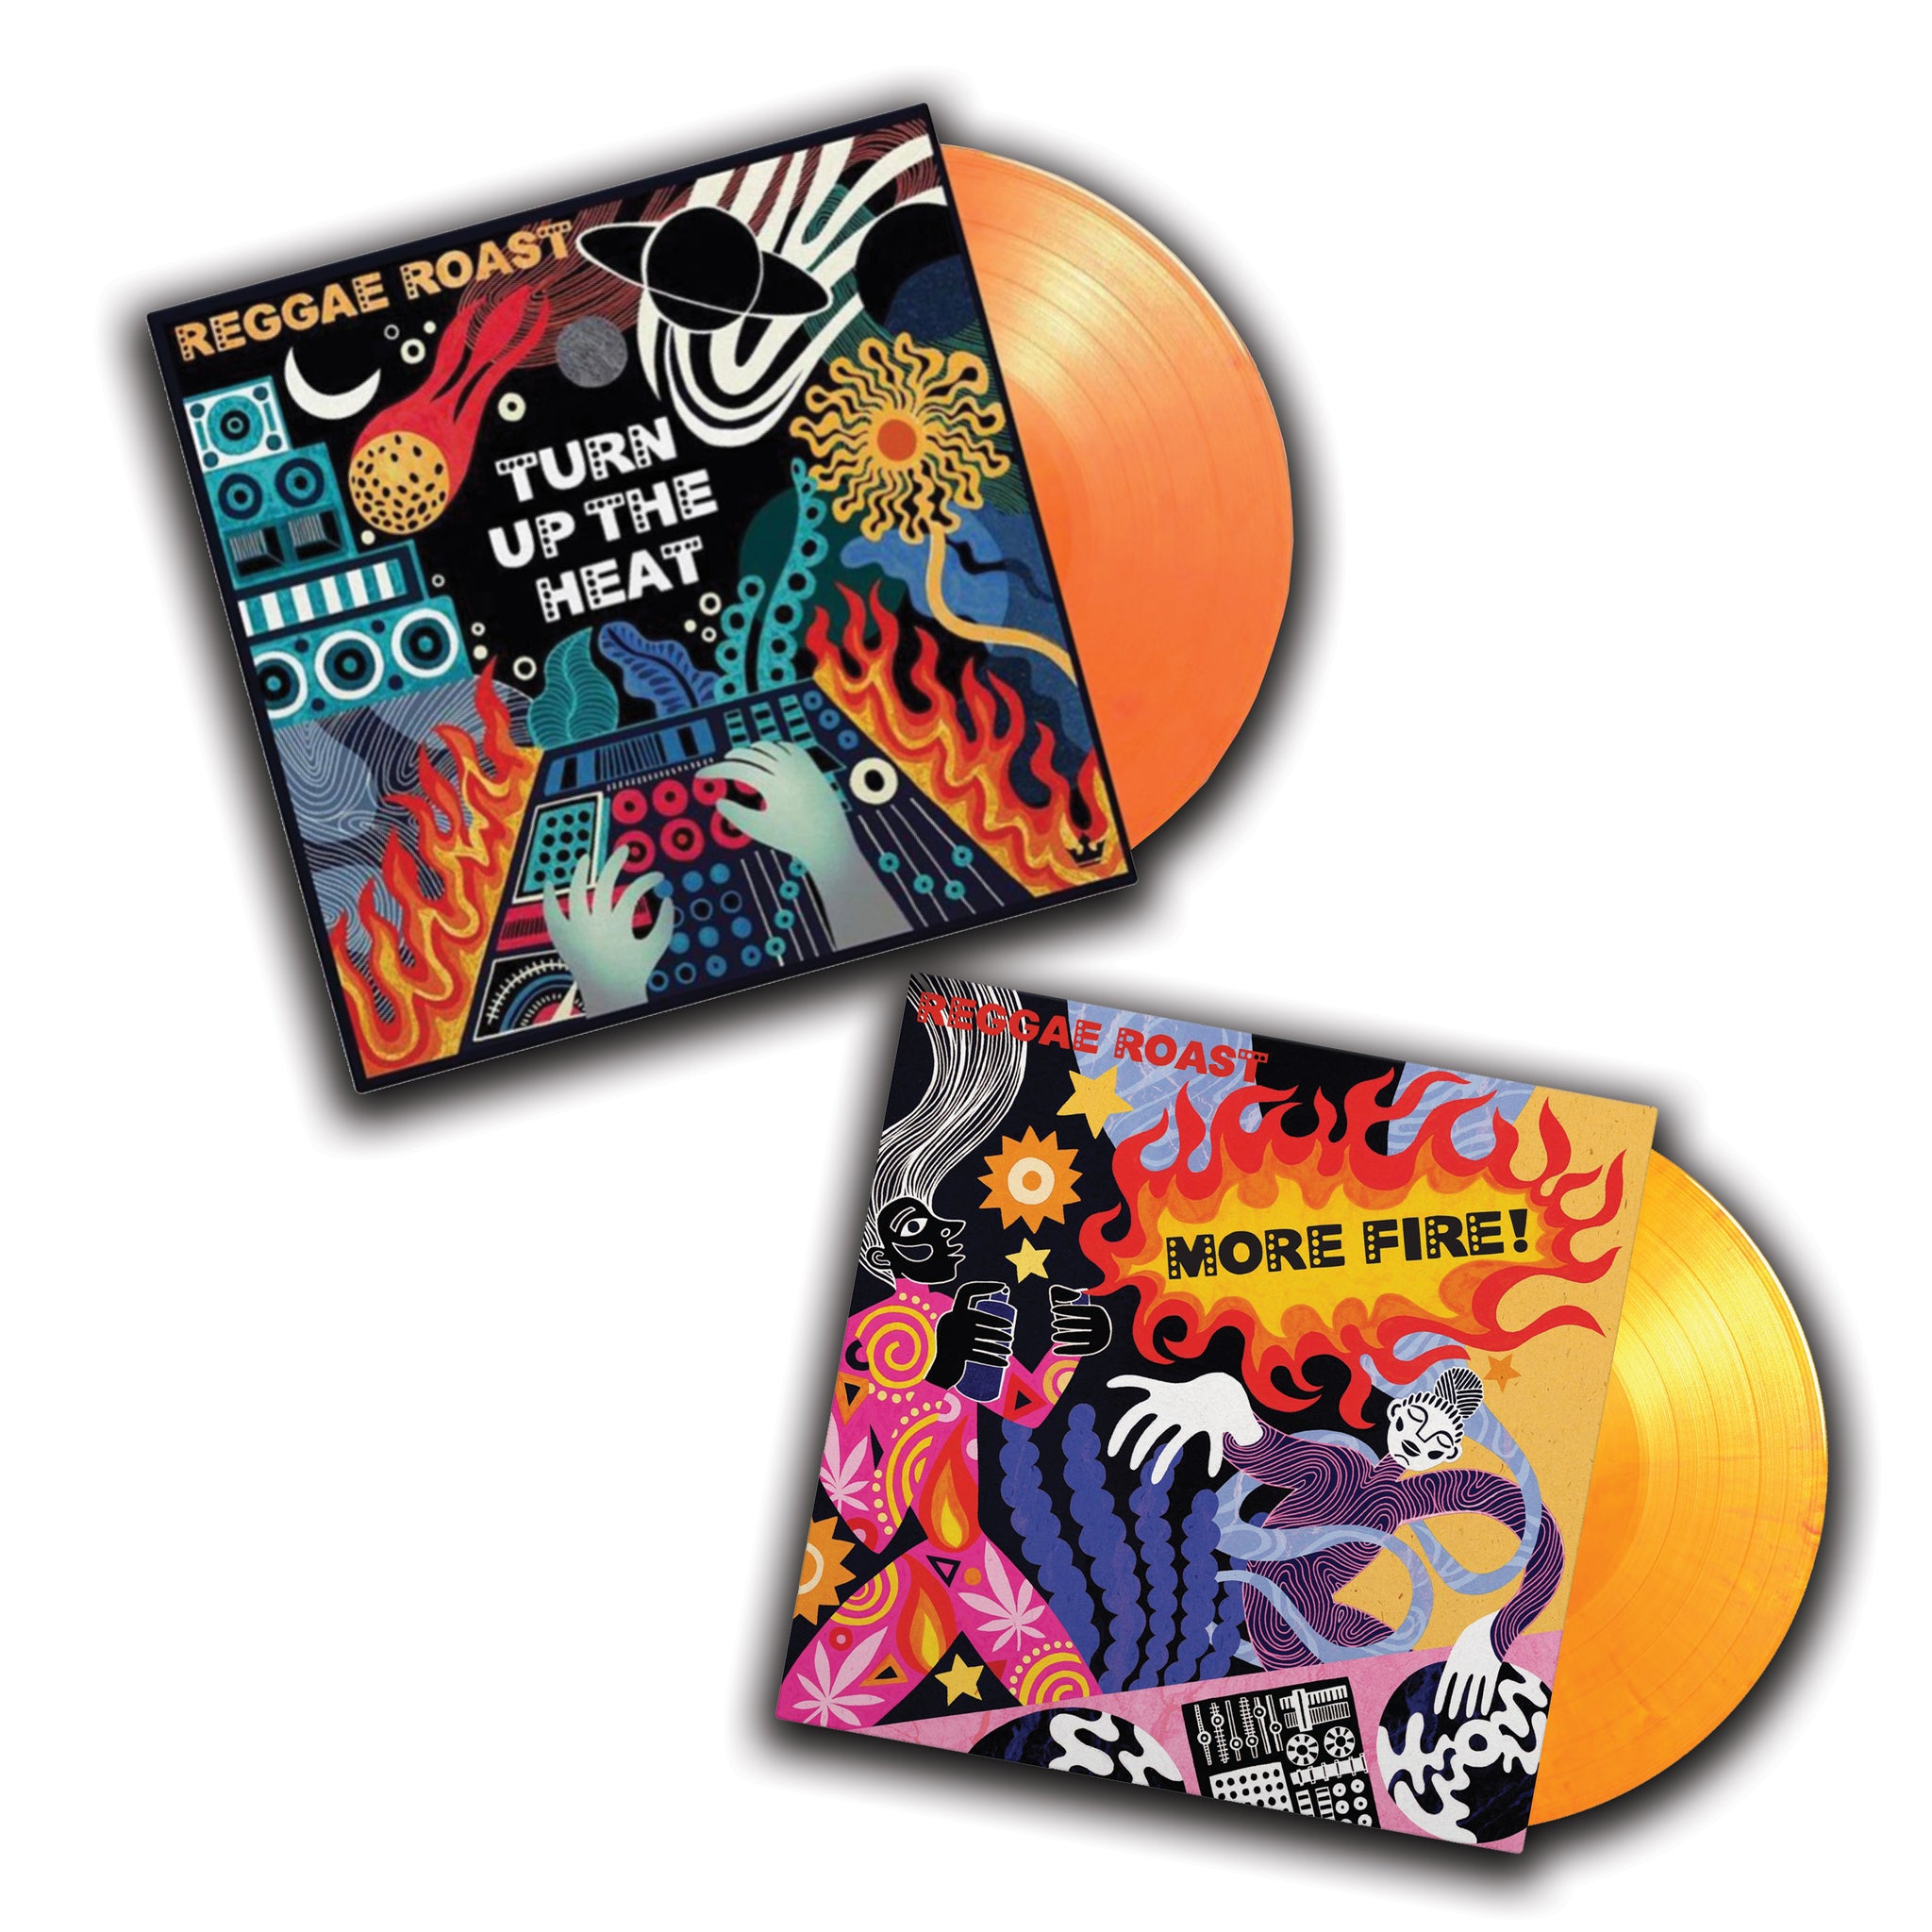 2 x Reggae Roast Vinyl LP Bundle (Both 'Turn Up The Heat' & 'More Fire!' Vinyl LPs)